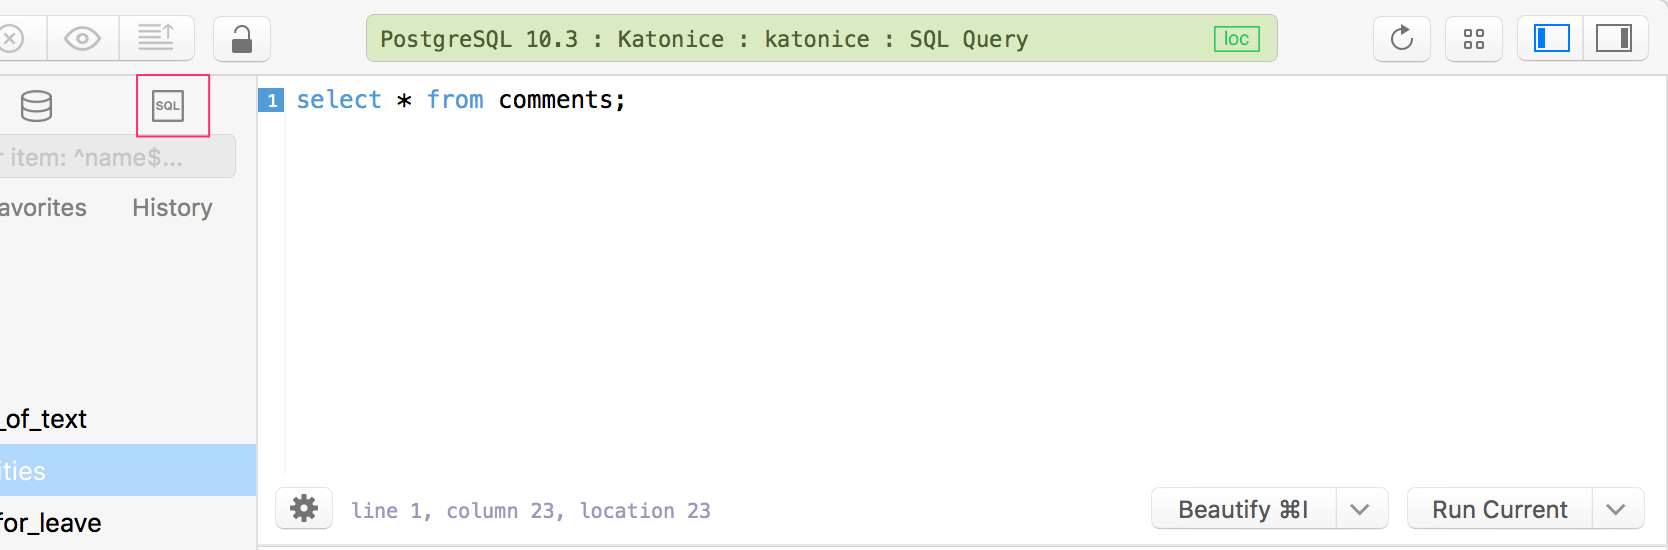 Open SQL query editor